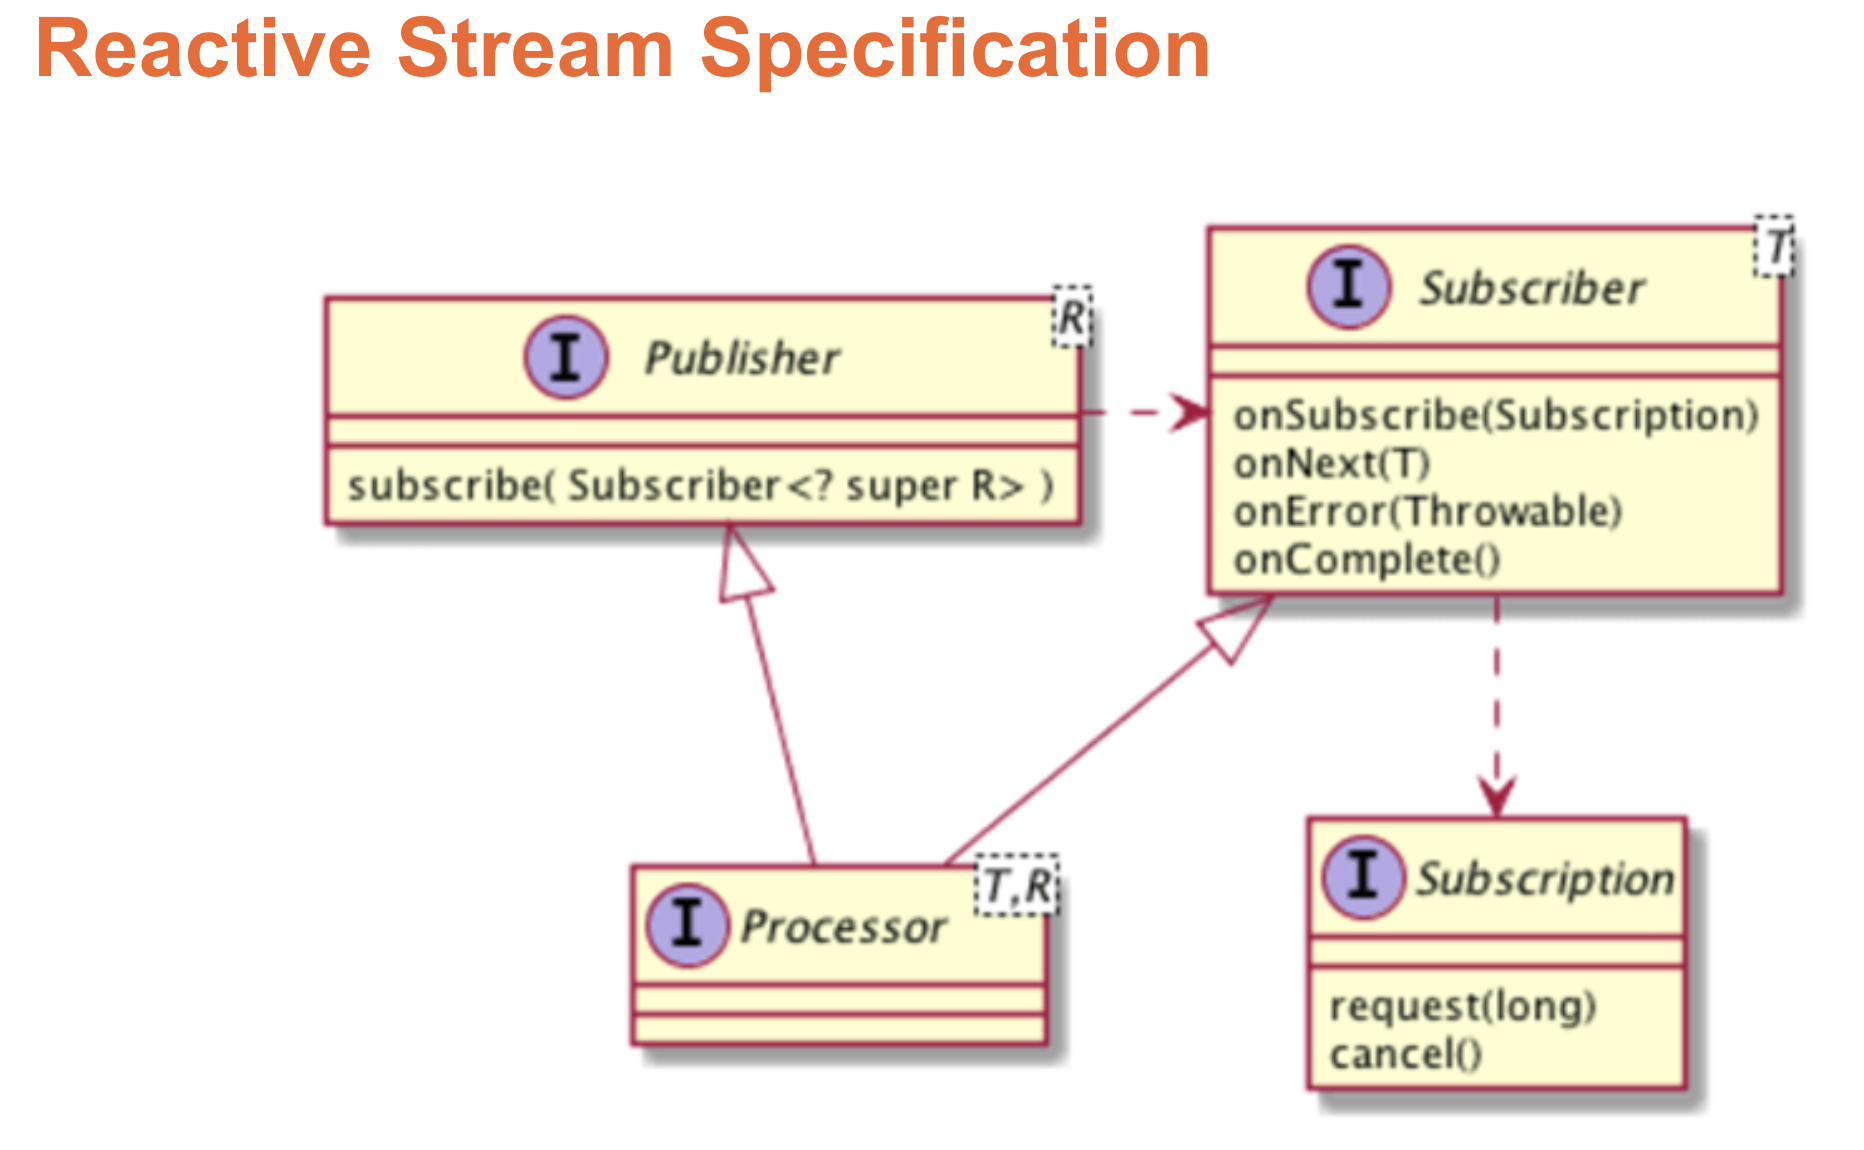 Reactive stream specification